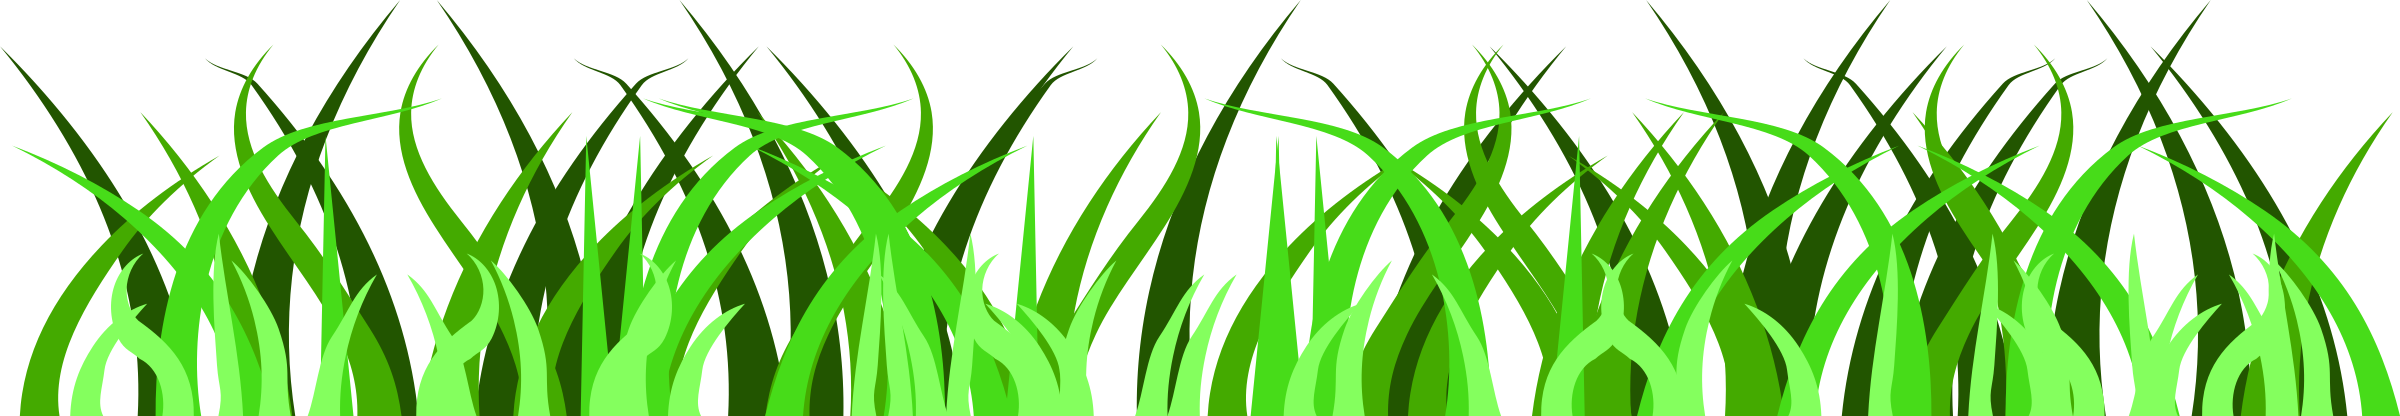 free clip art blades of grass - photo #19